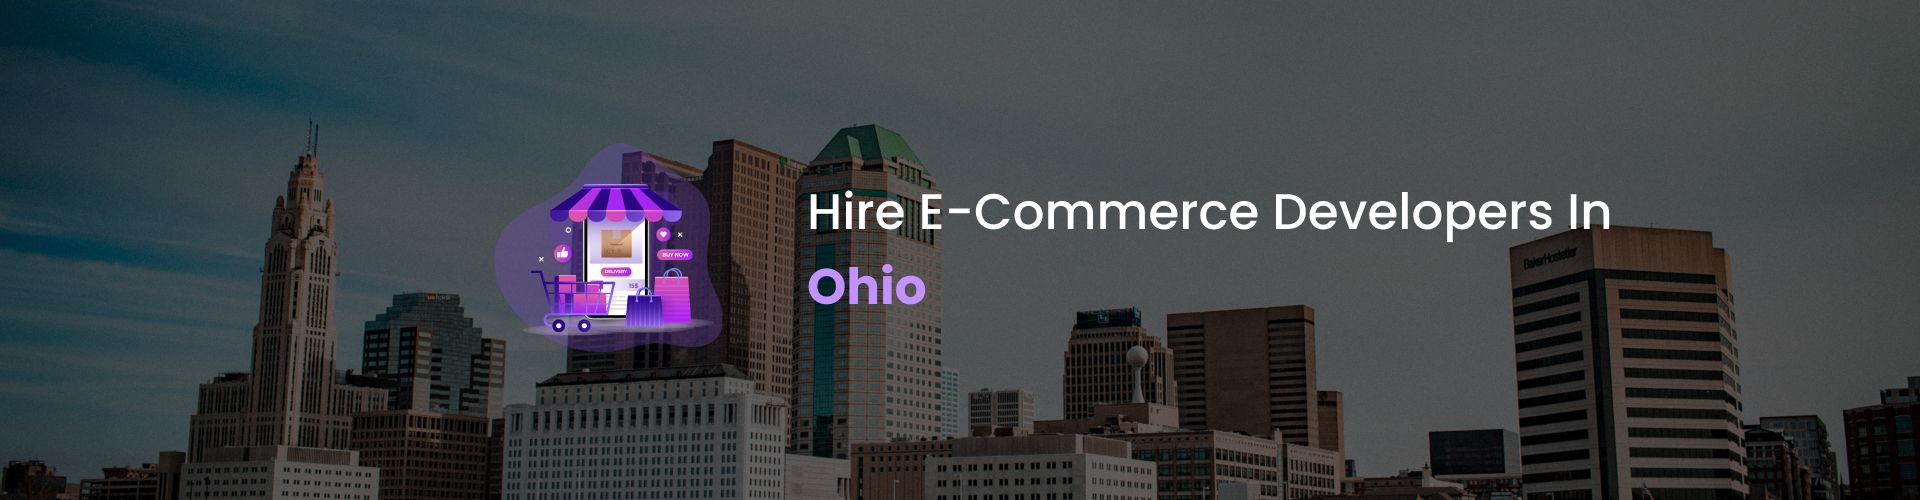 hire ecommerce developers in ohio